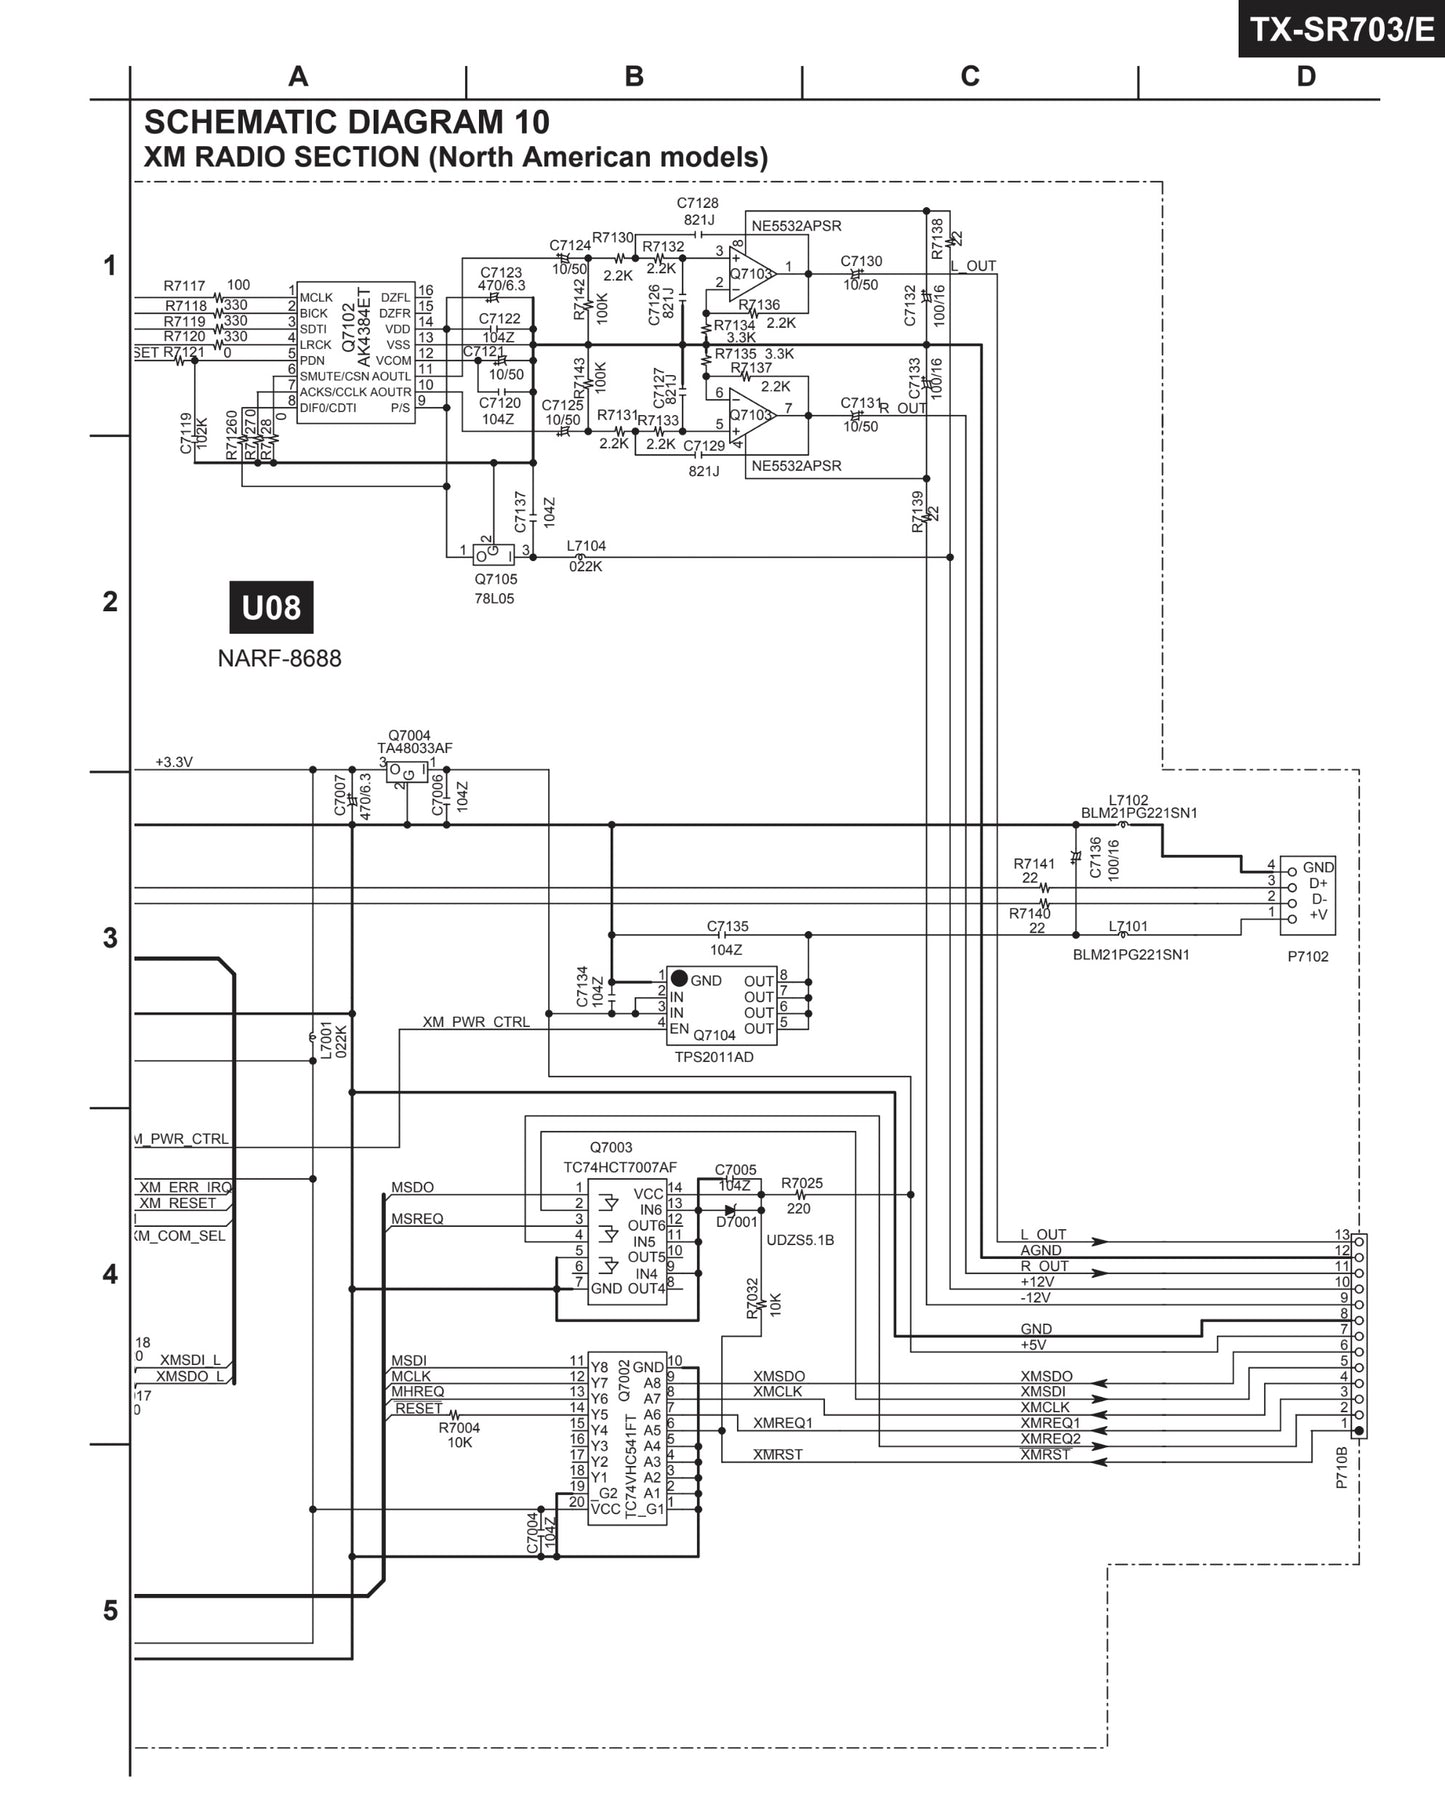 Onkyo TX-SR703, TX-SR703/E AV Receiver Service Manual (Pages: 133)